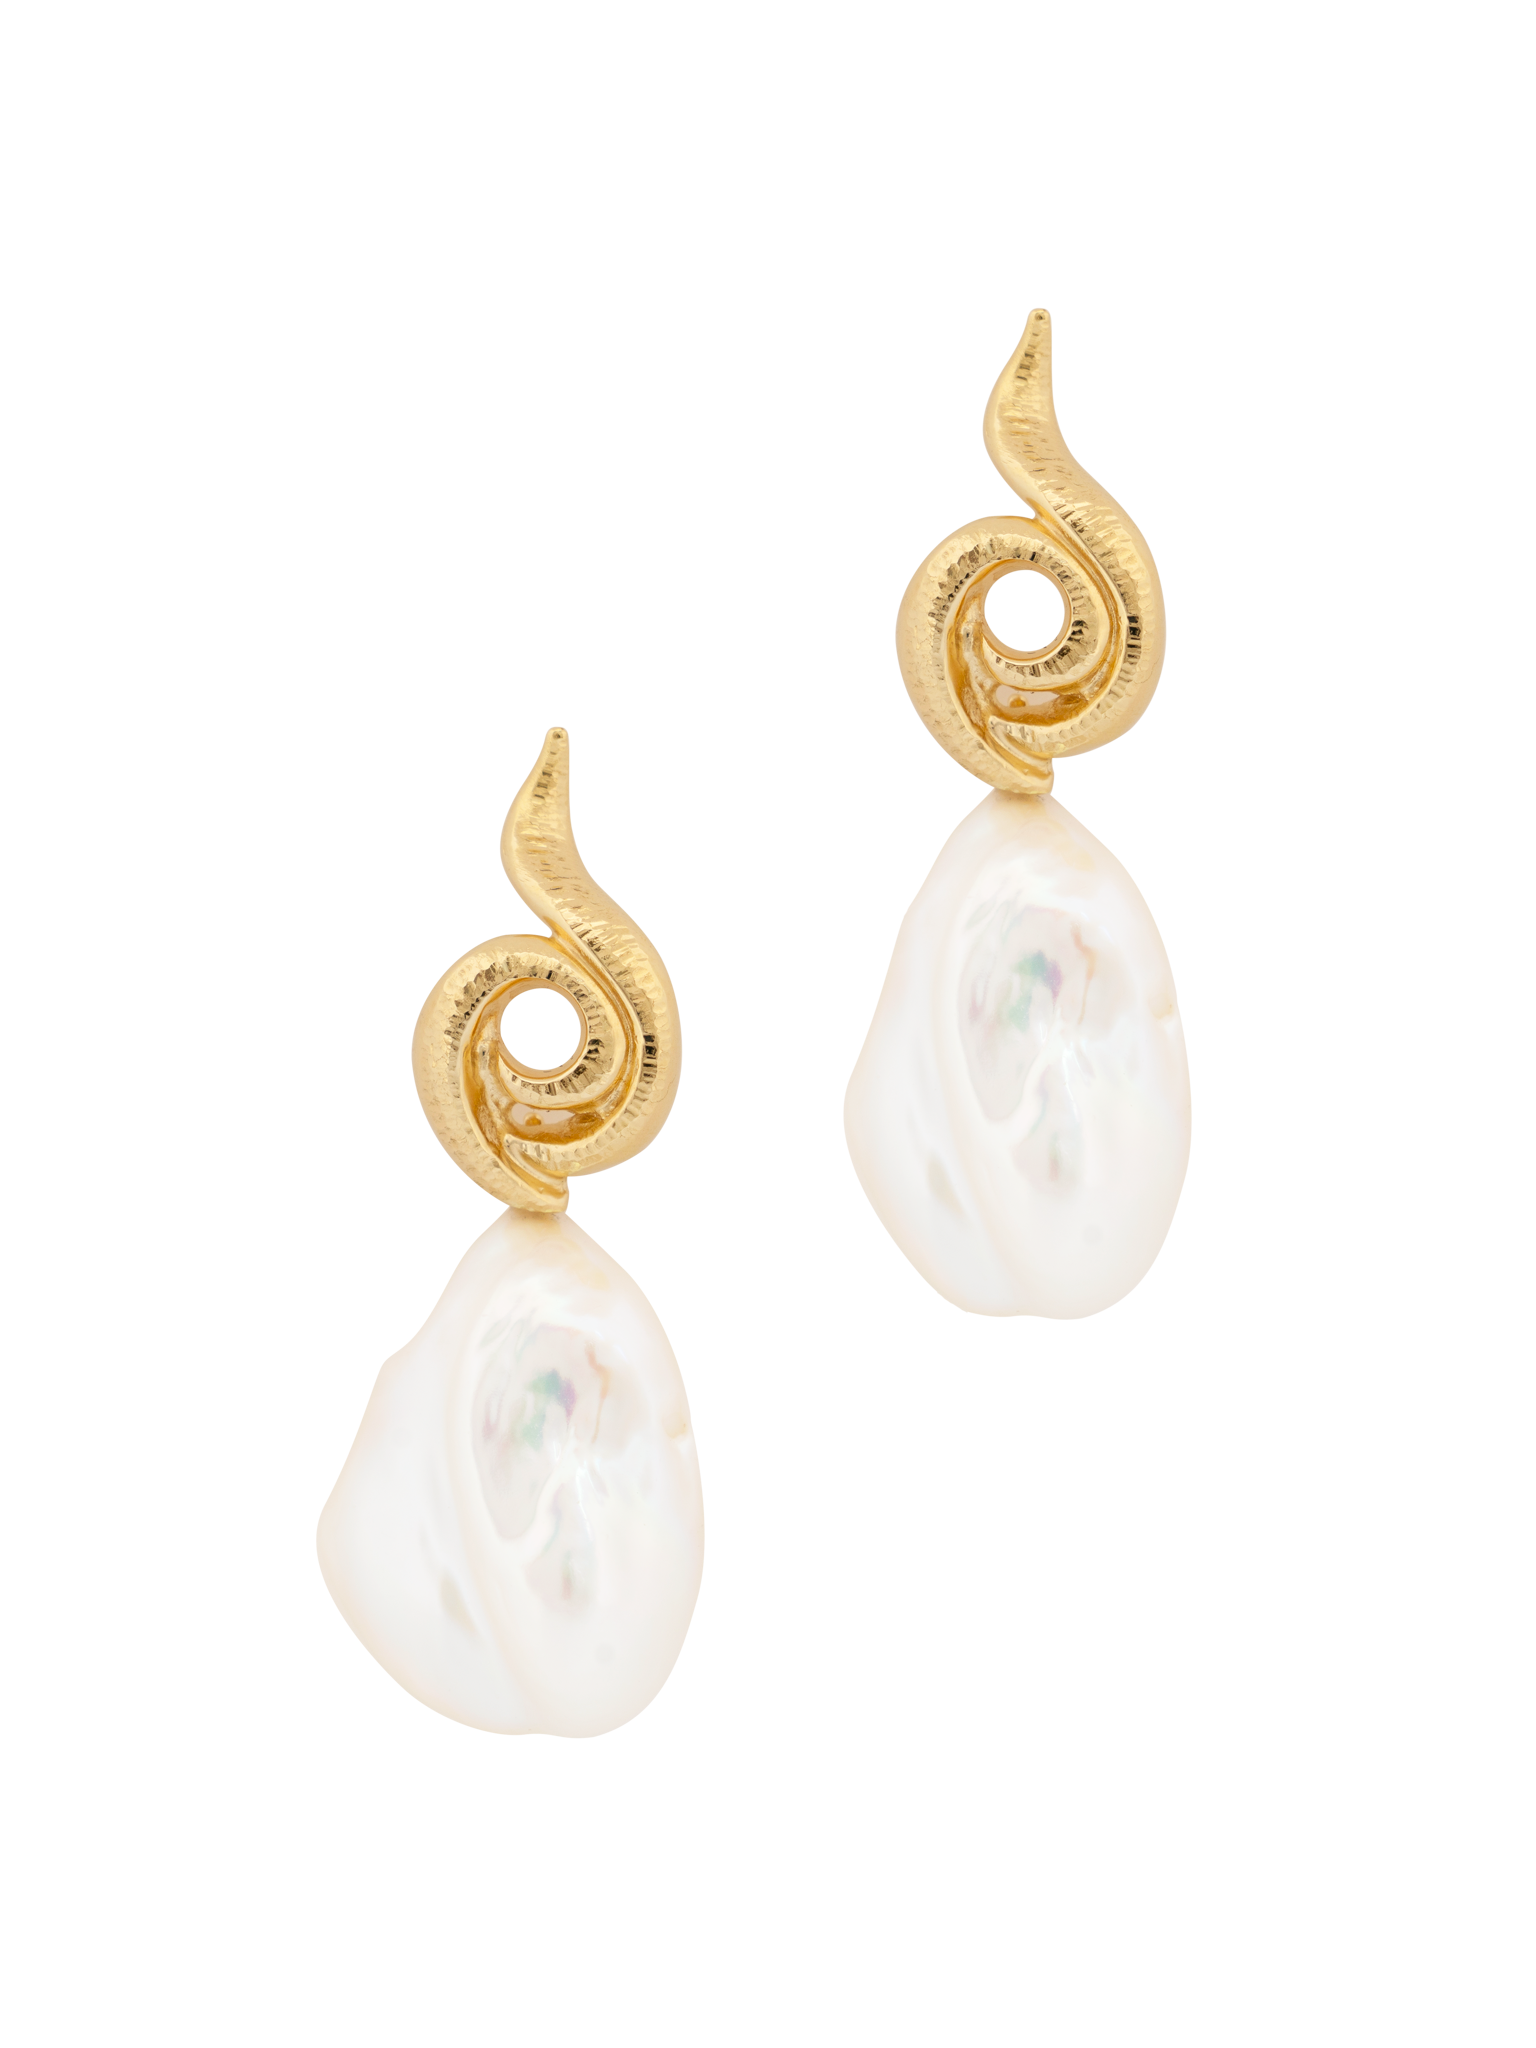 Surrea baroque pearl earrings